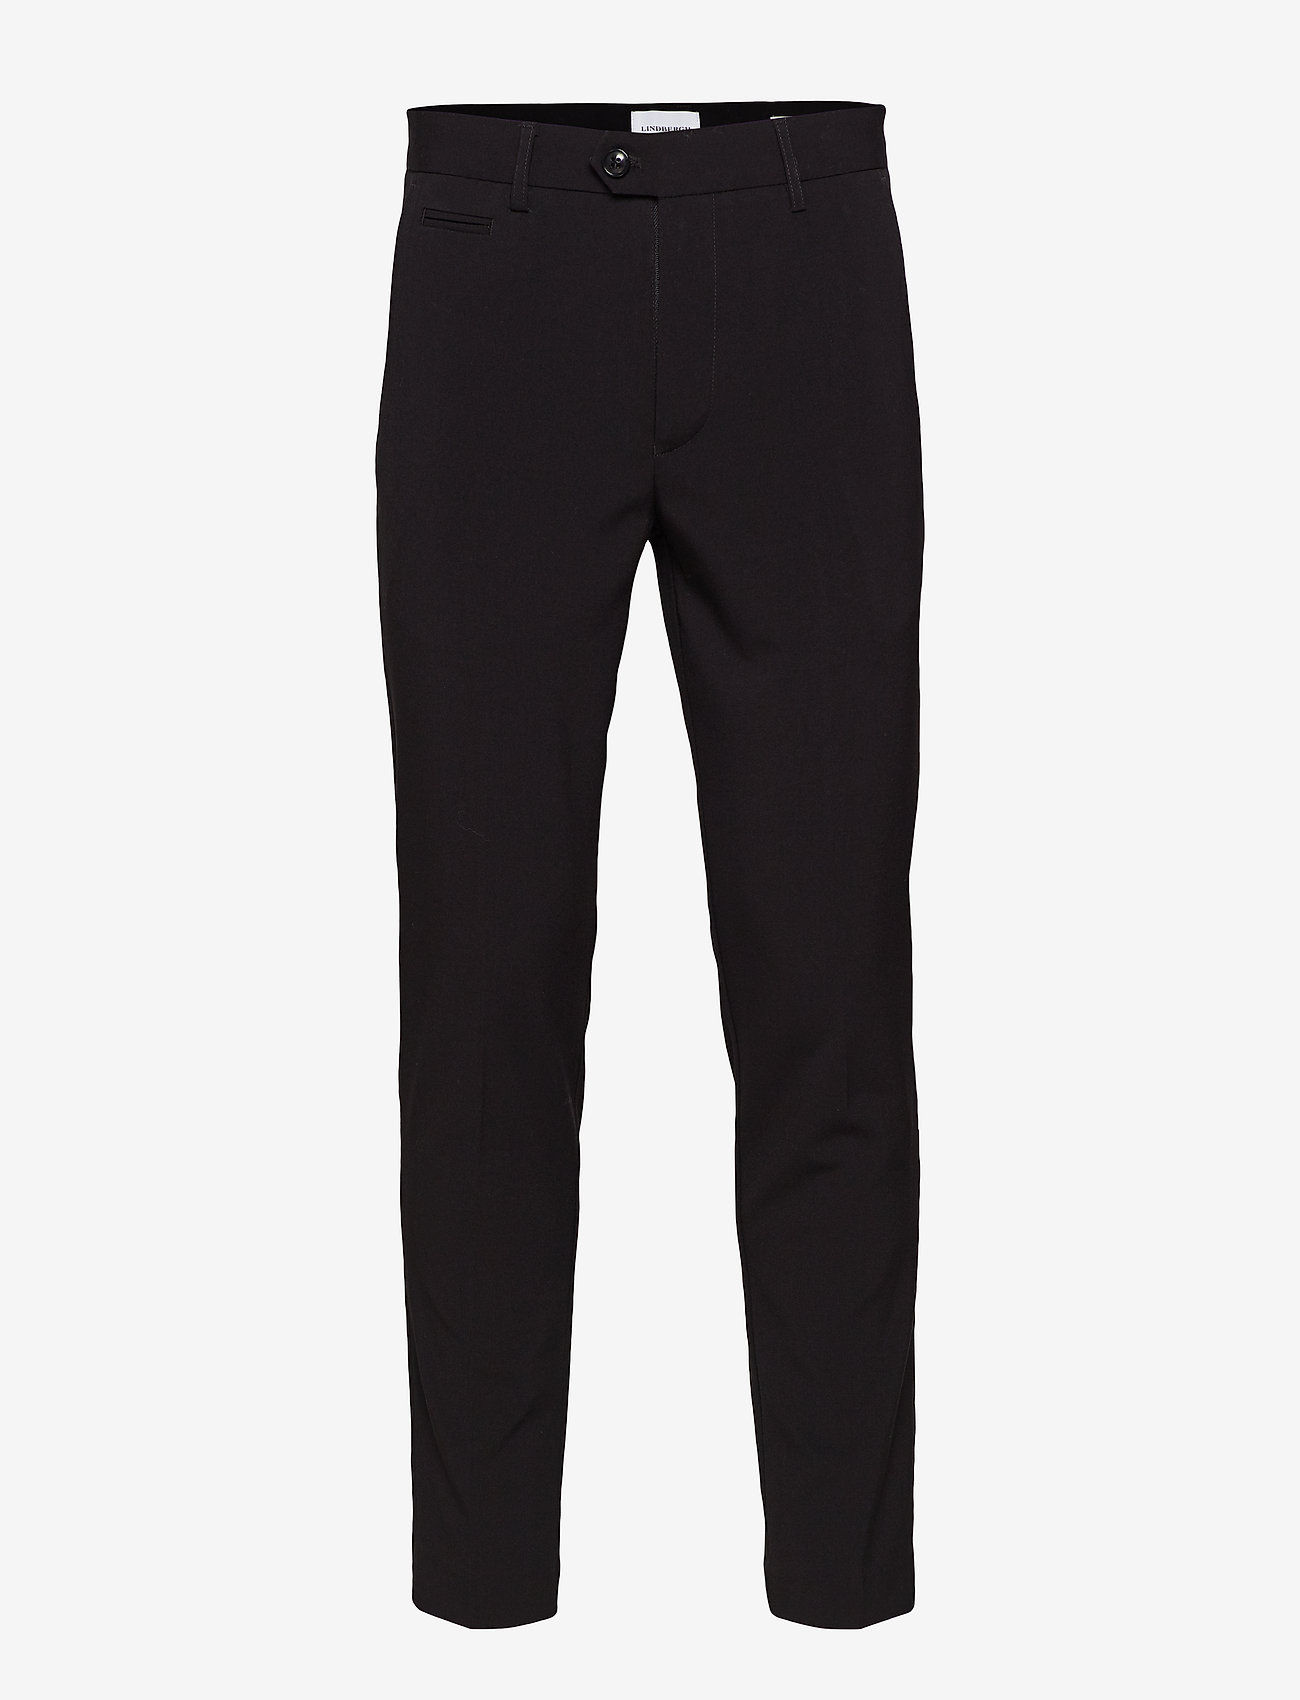 Lindbergh - Club pants - nordic style - black - 1